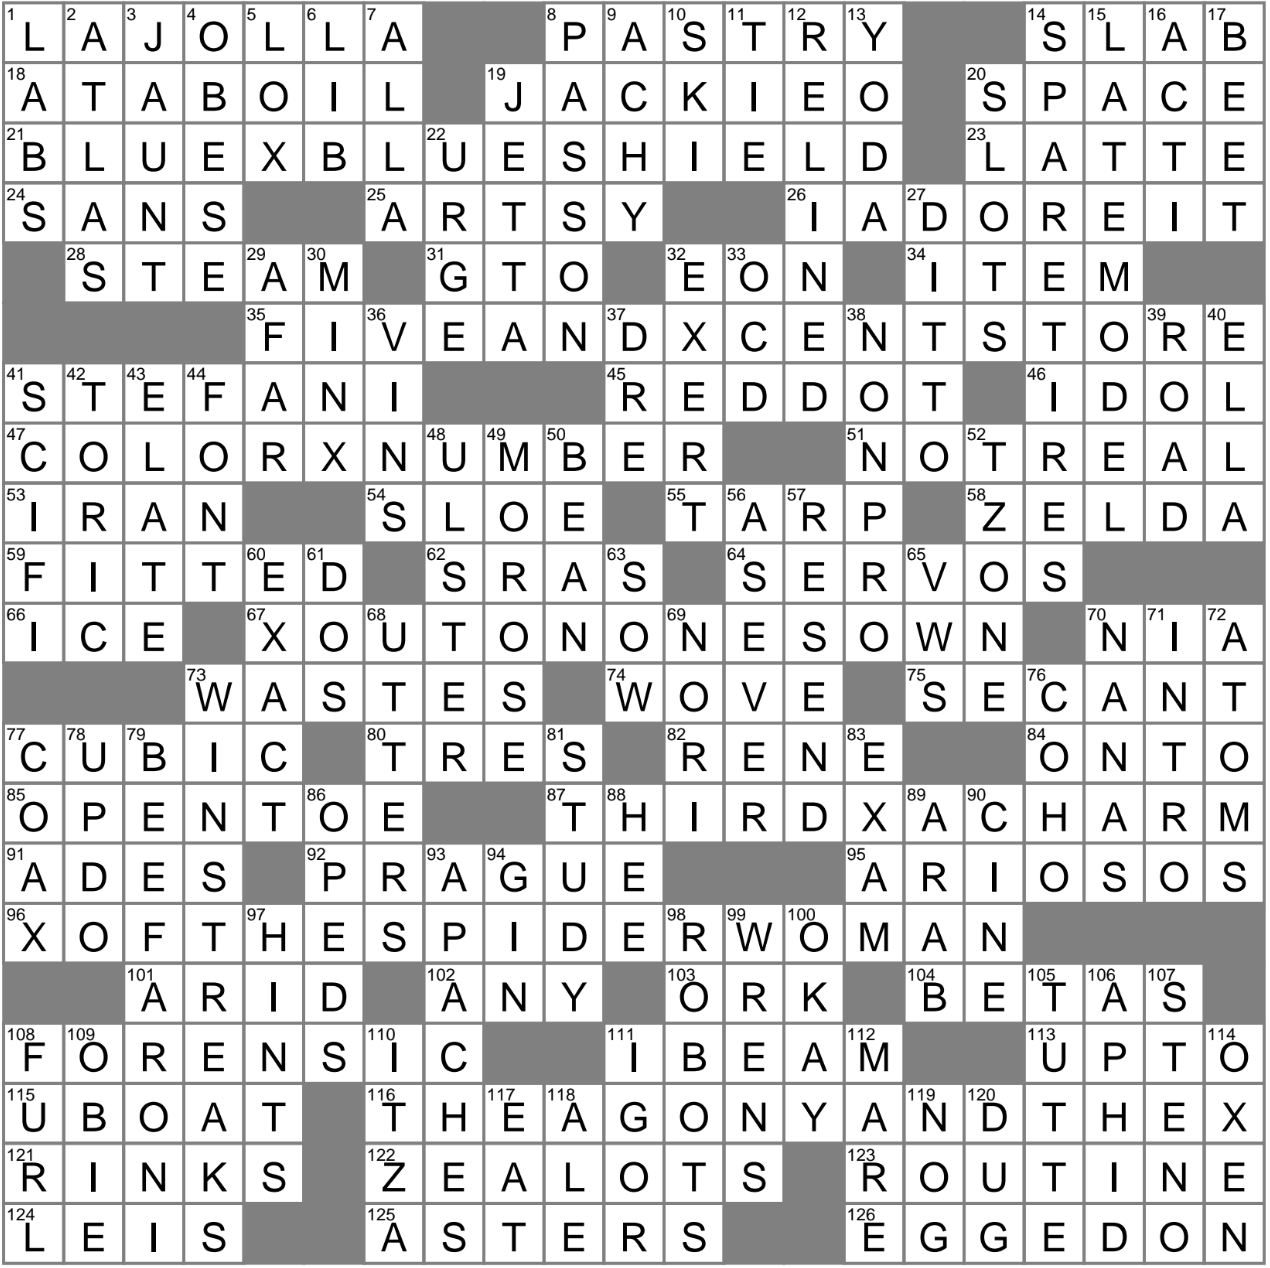 LA Times Crossword 24 Sep 23 Sunday LAXCrossword com